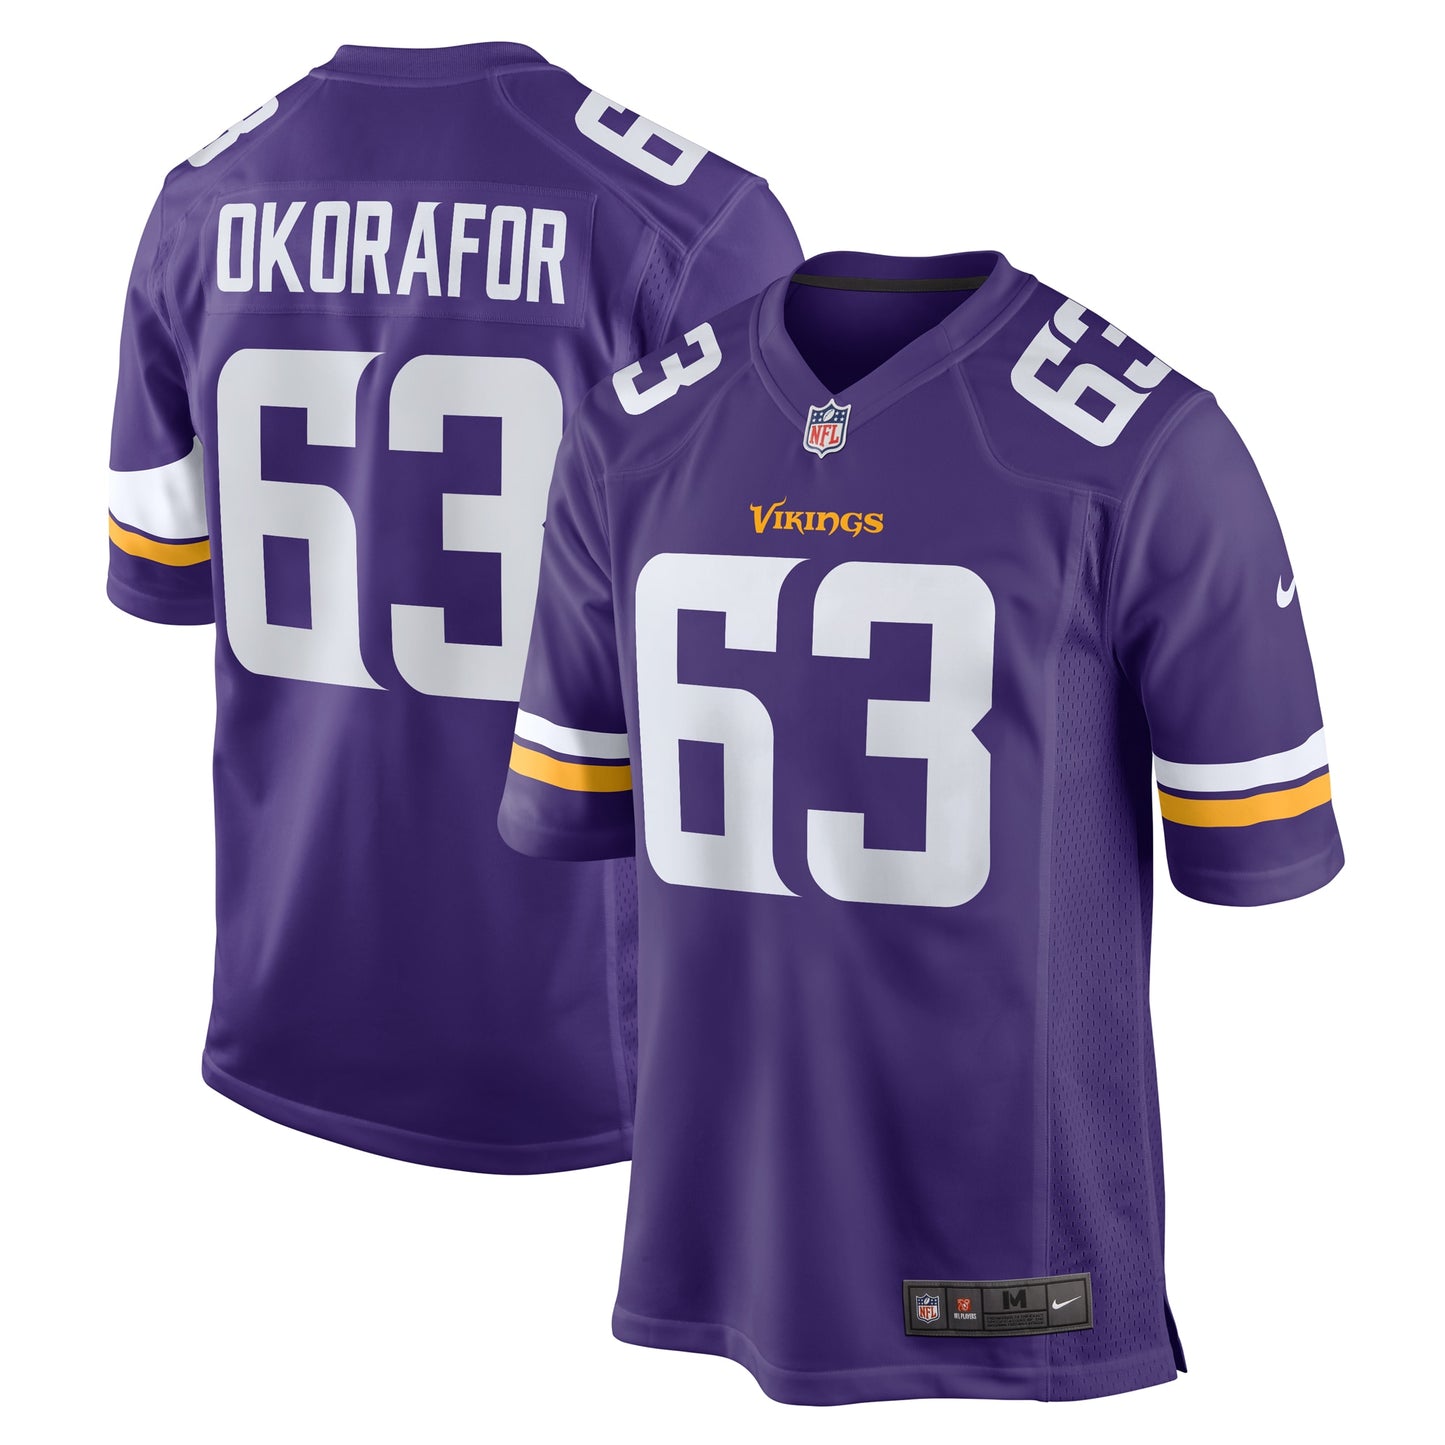 Chim Okorafor Minnesota Vikings Nike Team Game Jersey - Purple